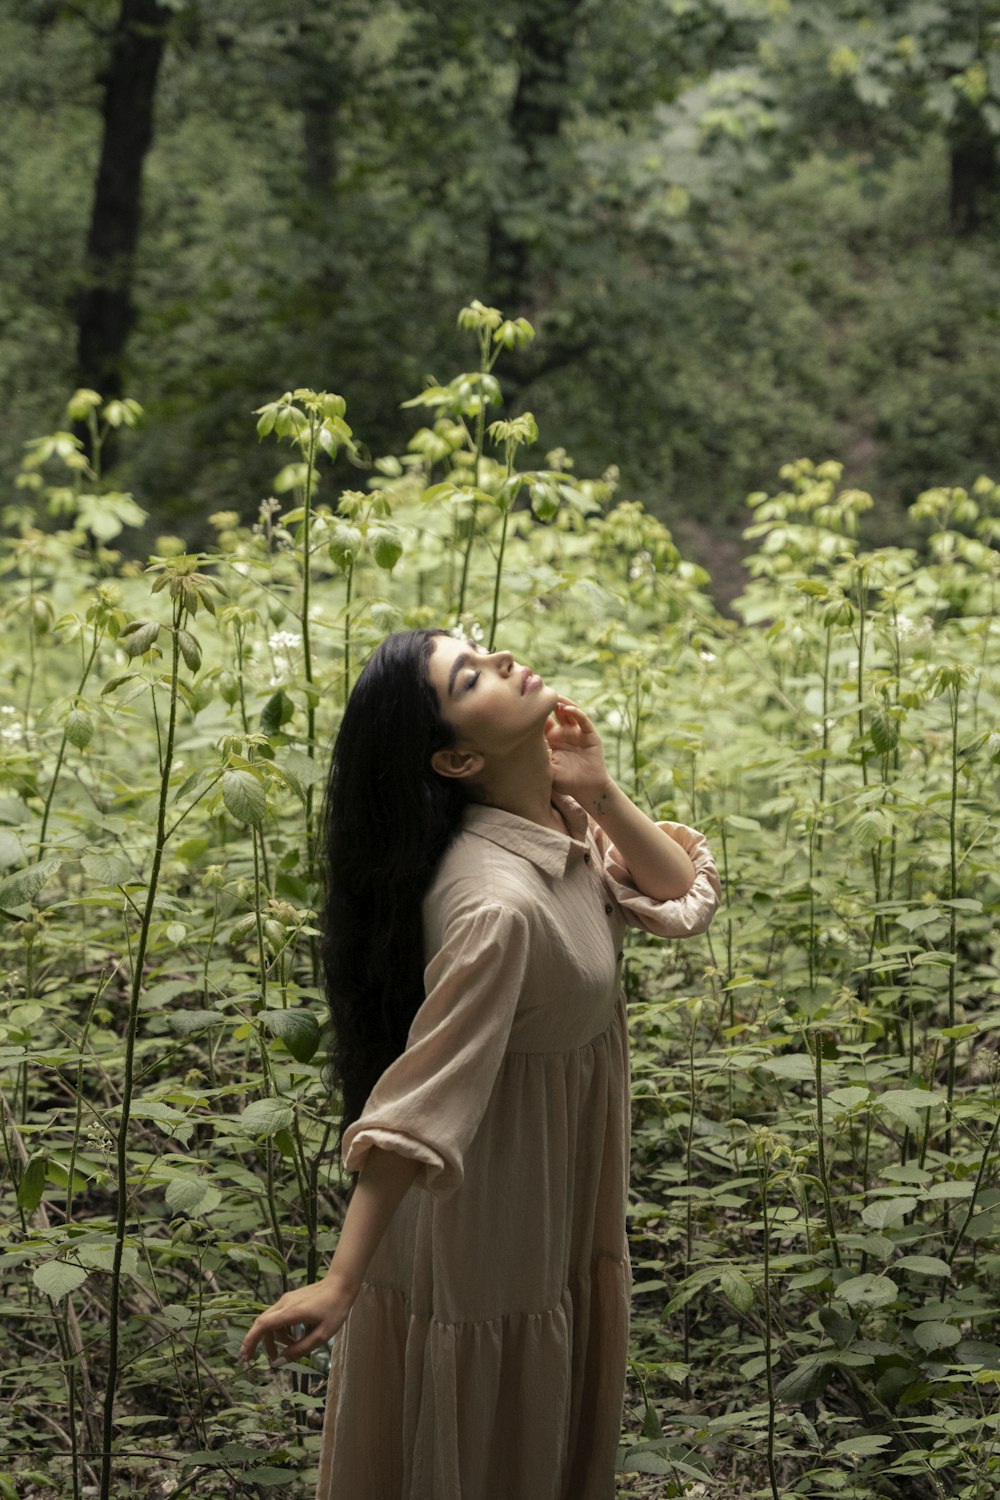 a woman in a dress standing in a field of plants